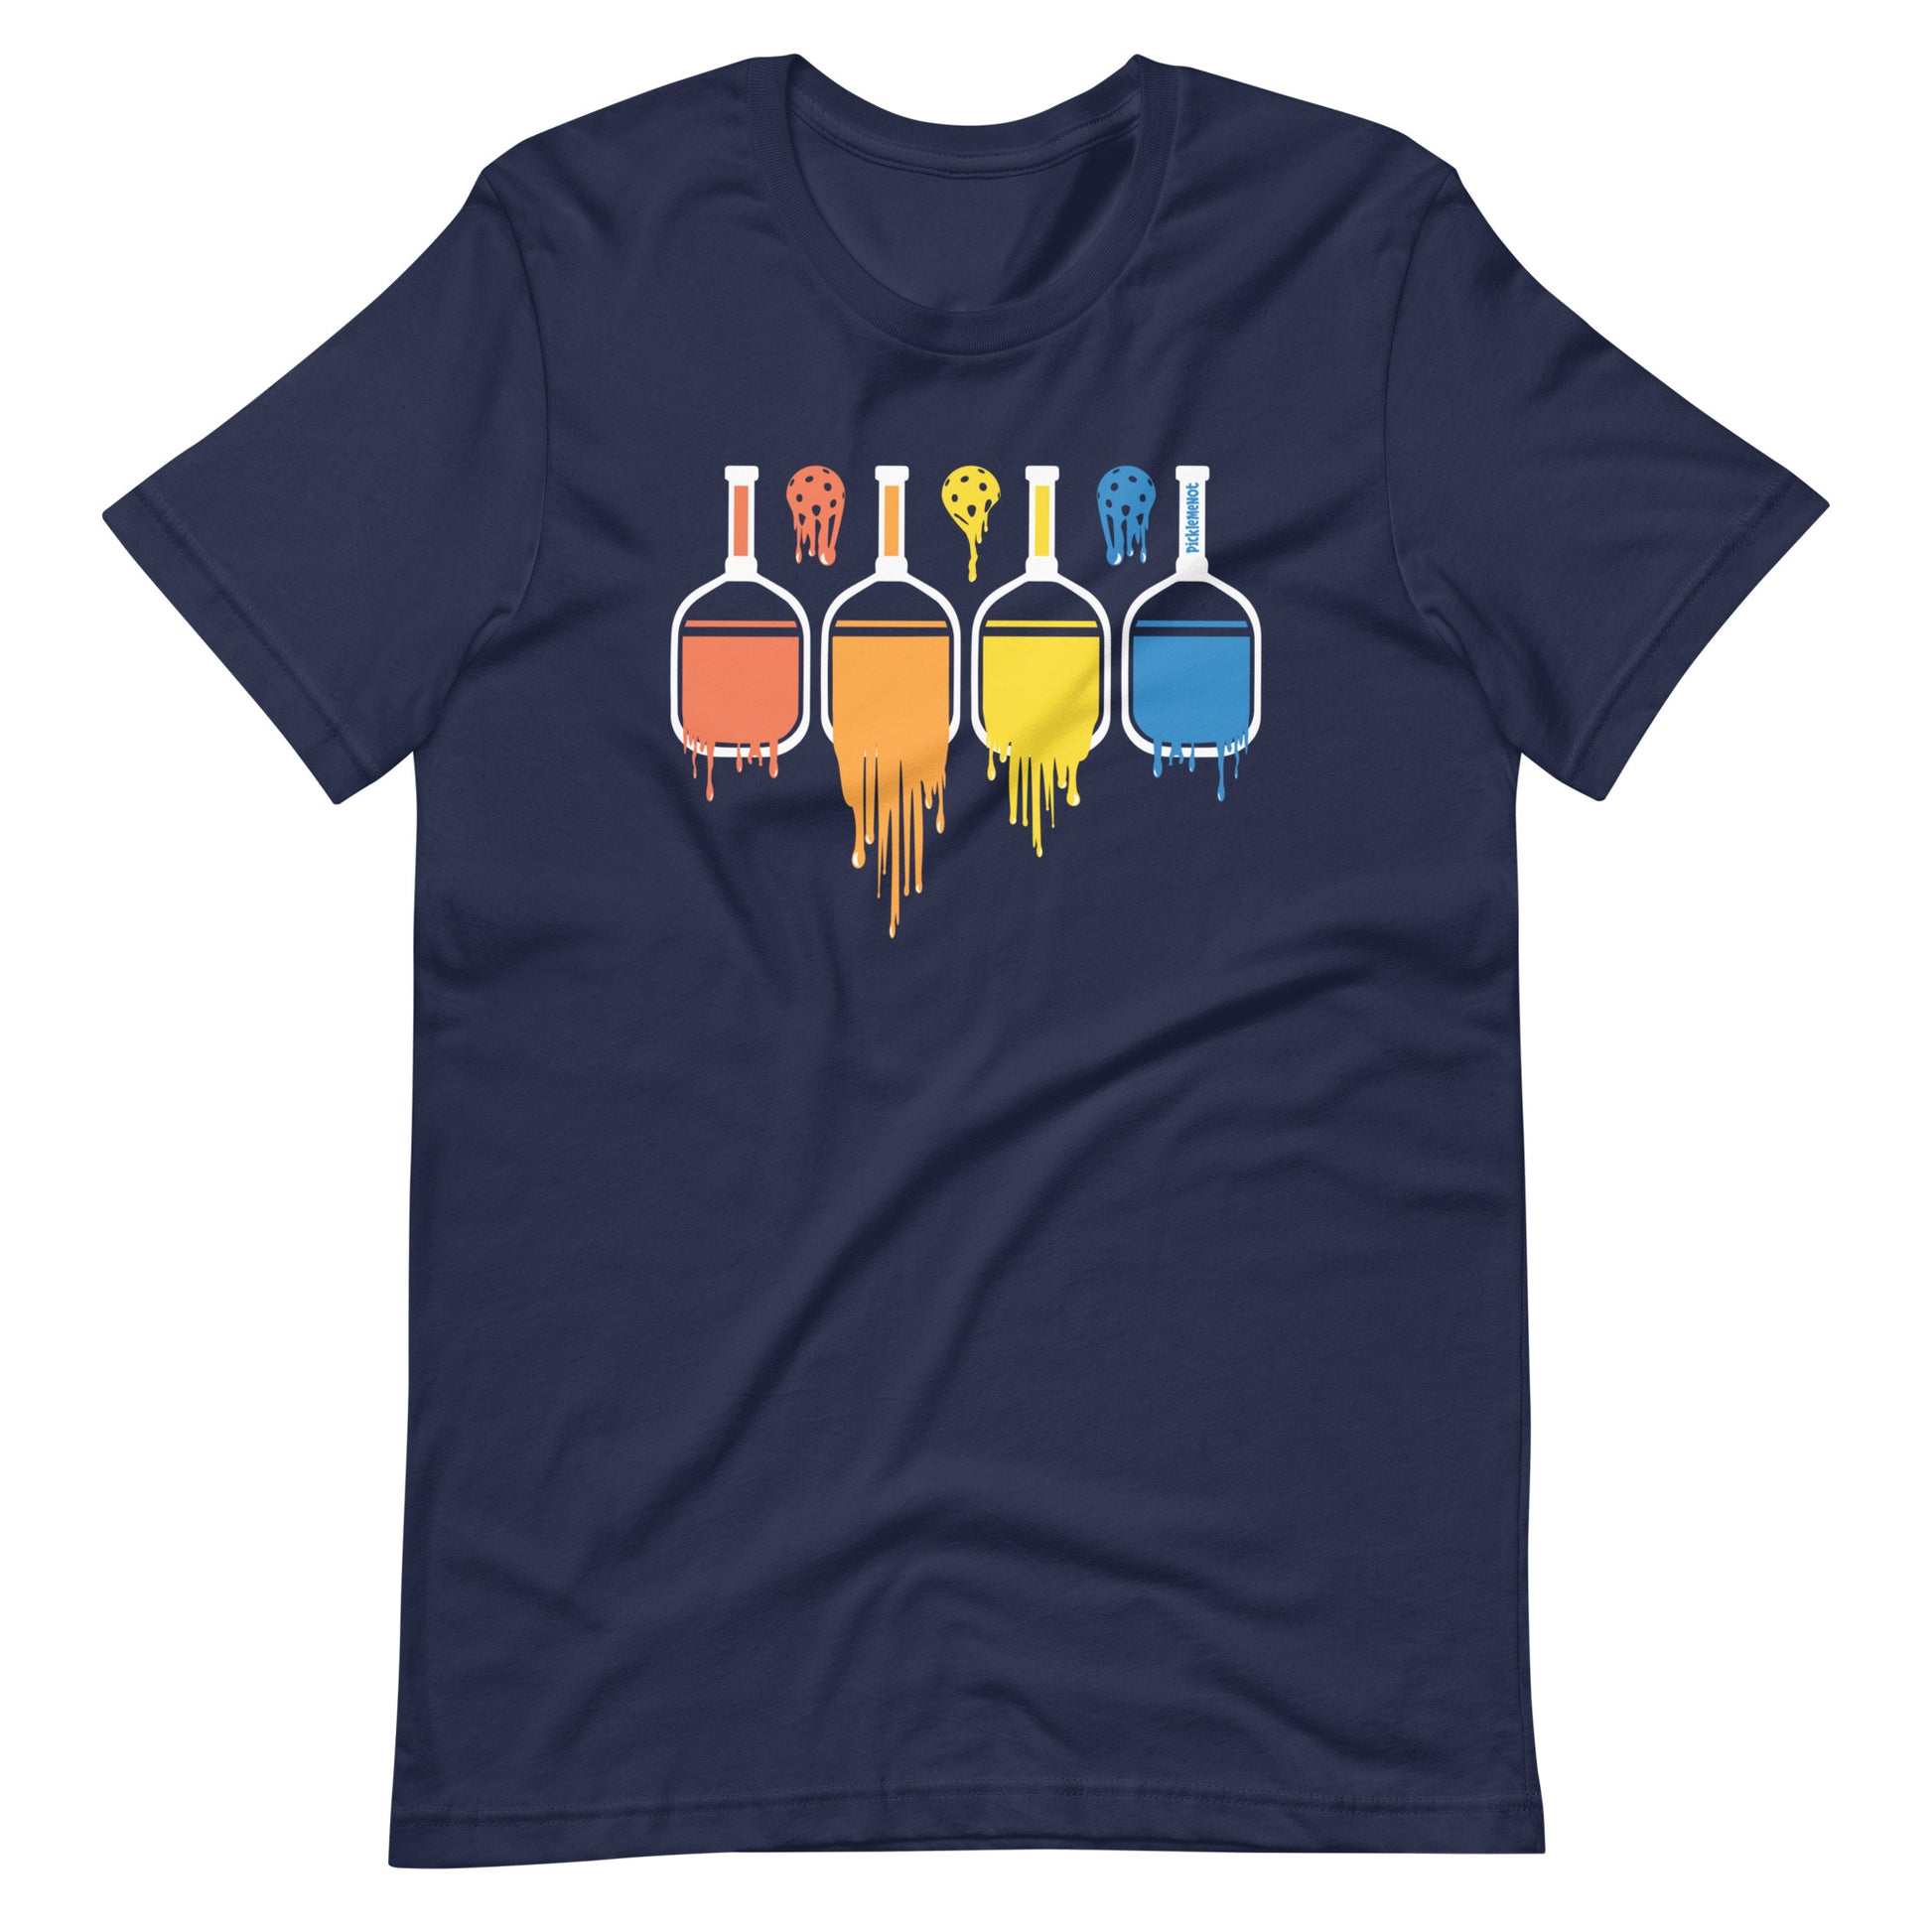 Fun Pickleball Pun: "Rainbow Colored Melting Paddles And Balls", Womens Unisex Navy T-Shirt